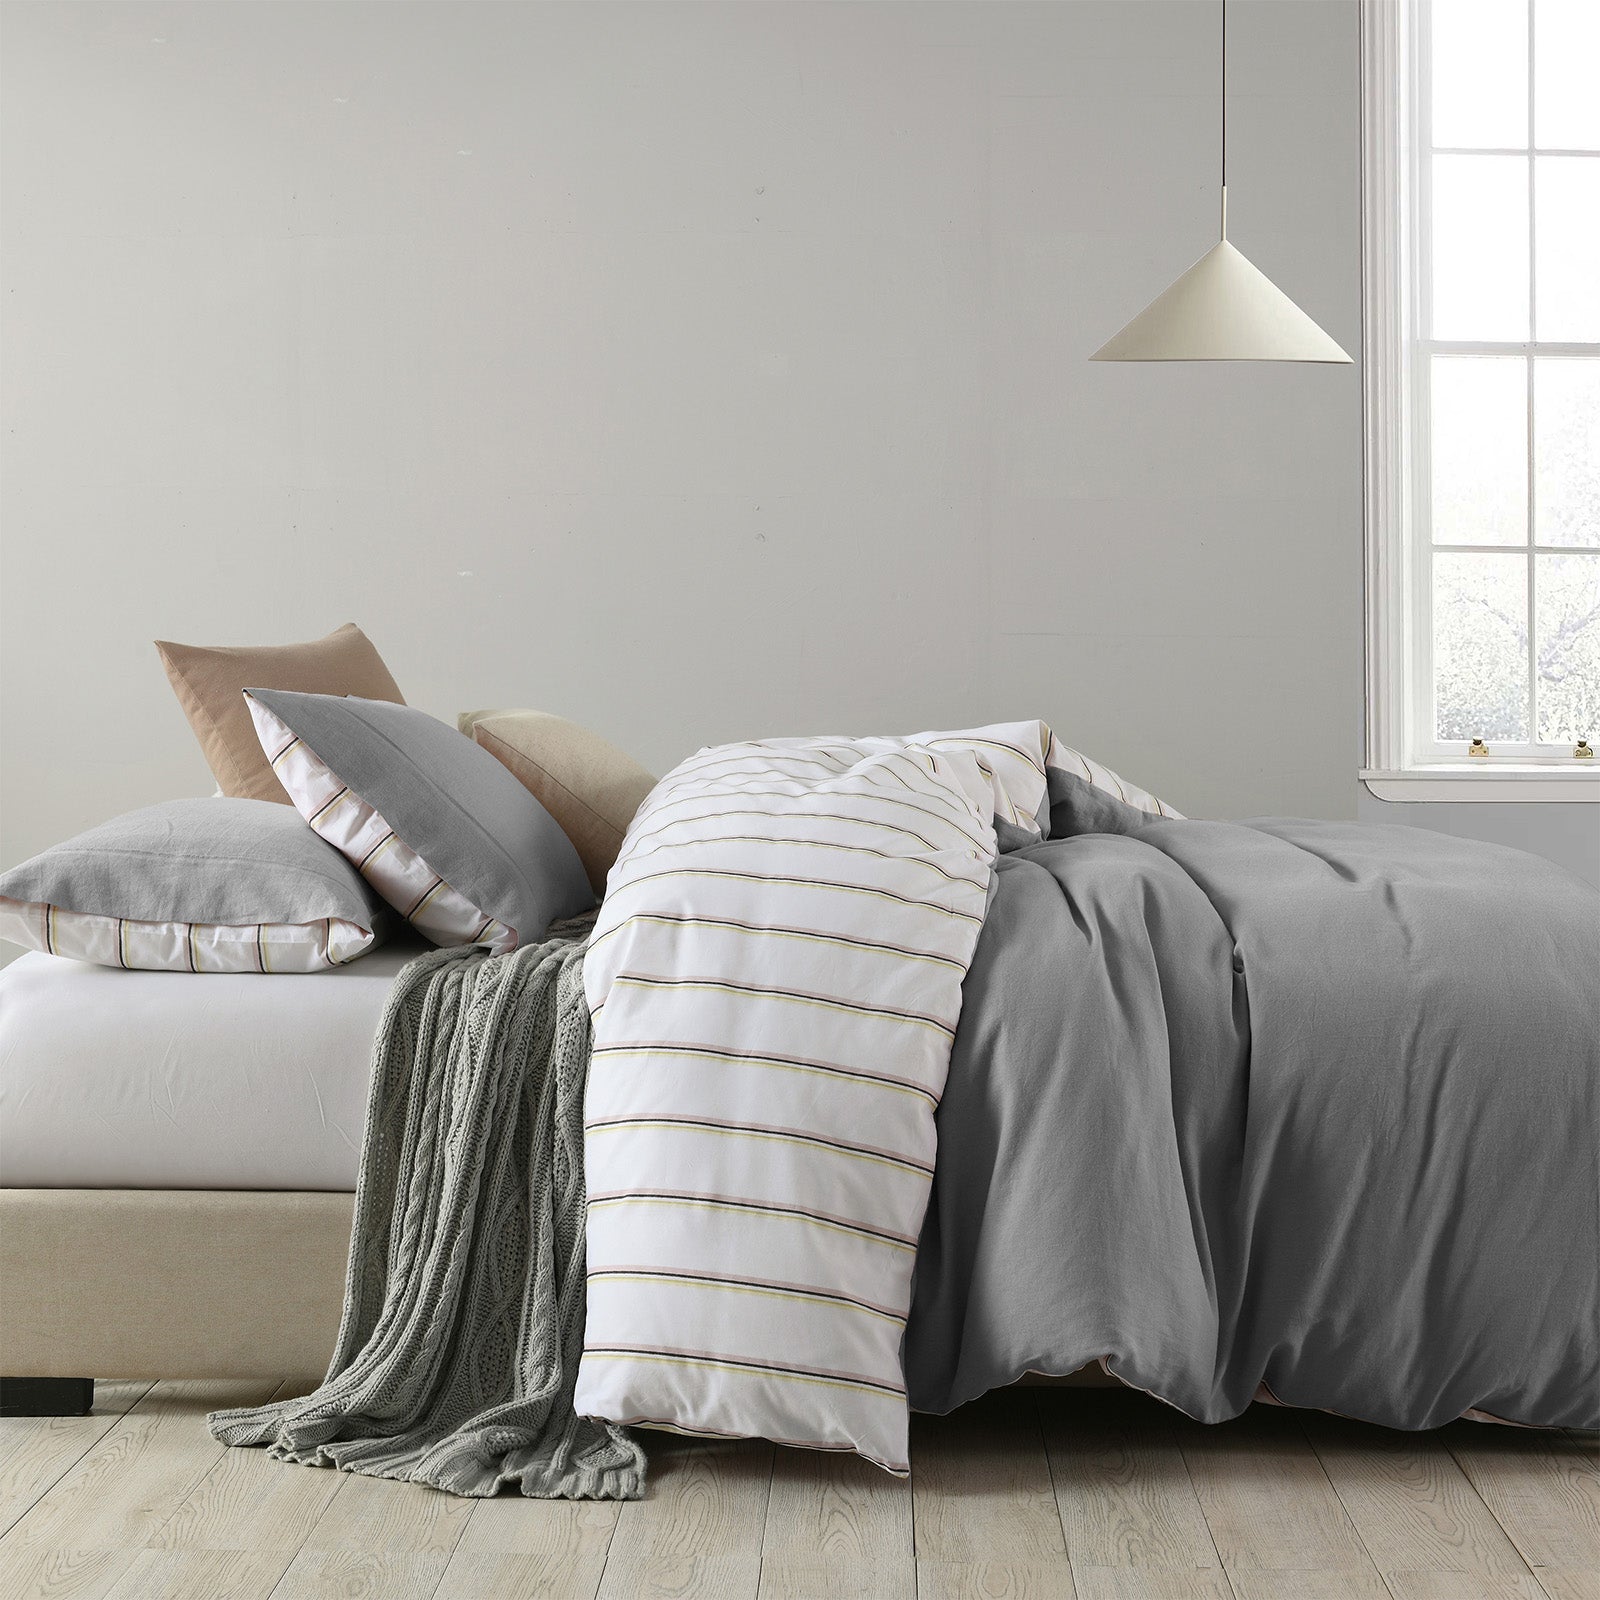 Hemp Braid Cotton Blend Quilt Cover Set Reverse Stripe Bedding - King - Light Grey